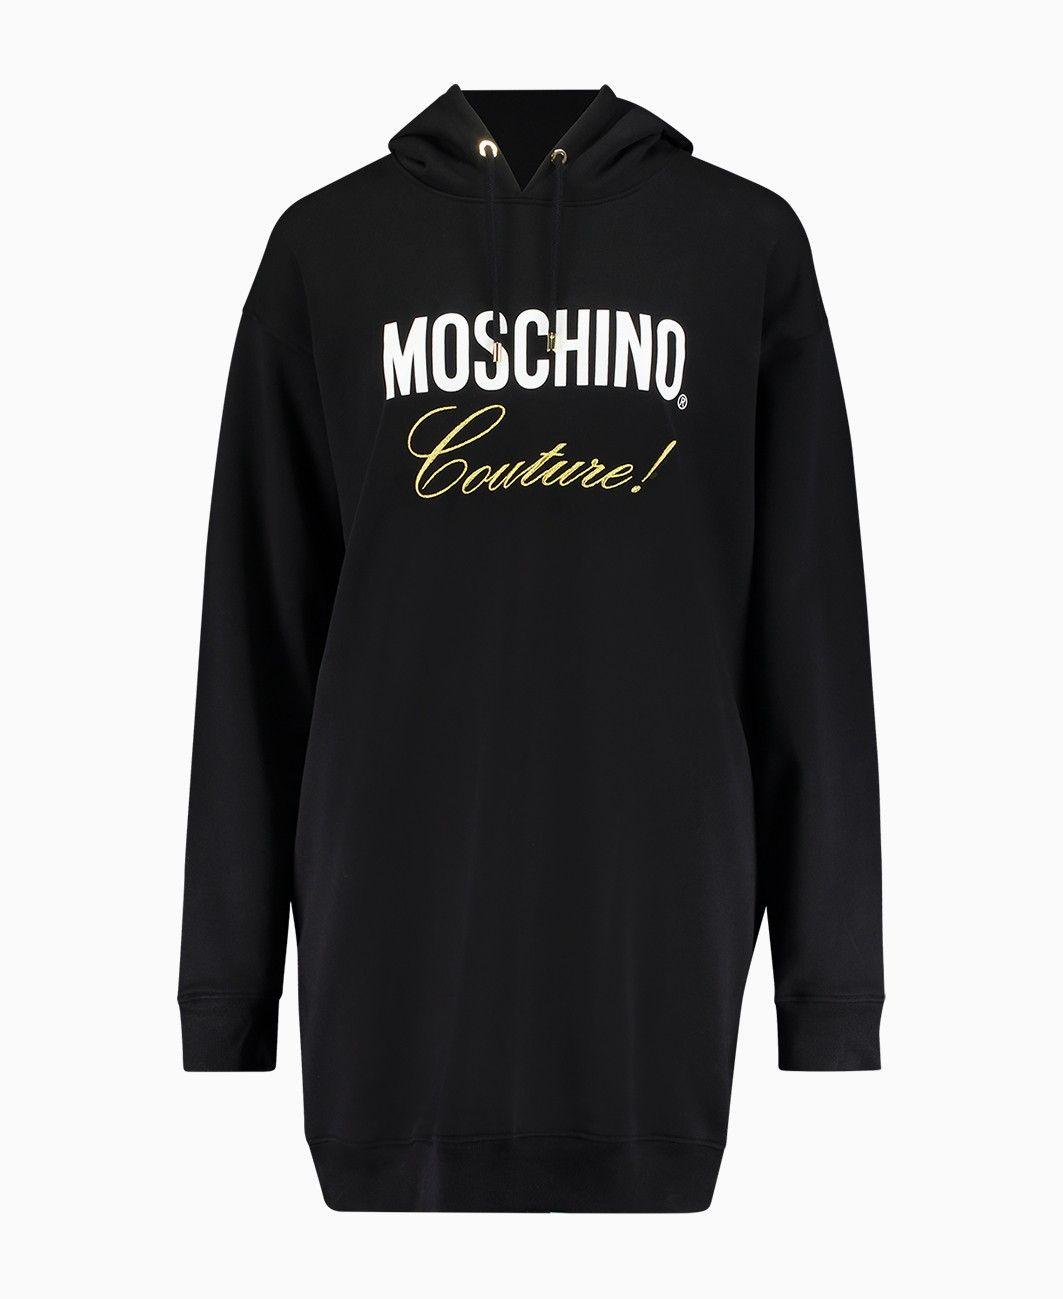 Moschino Couture Logo - Moschino! Logo Sweater Dress